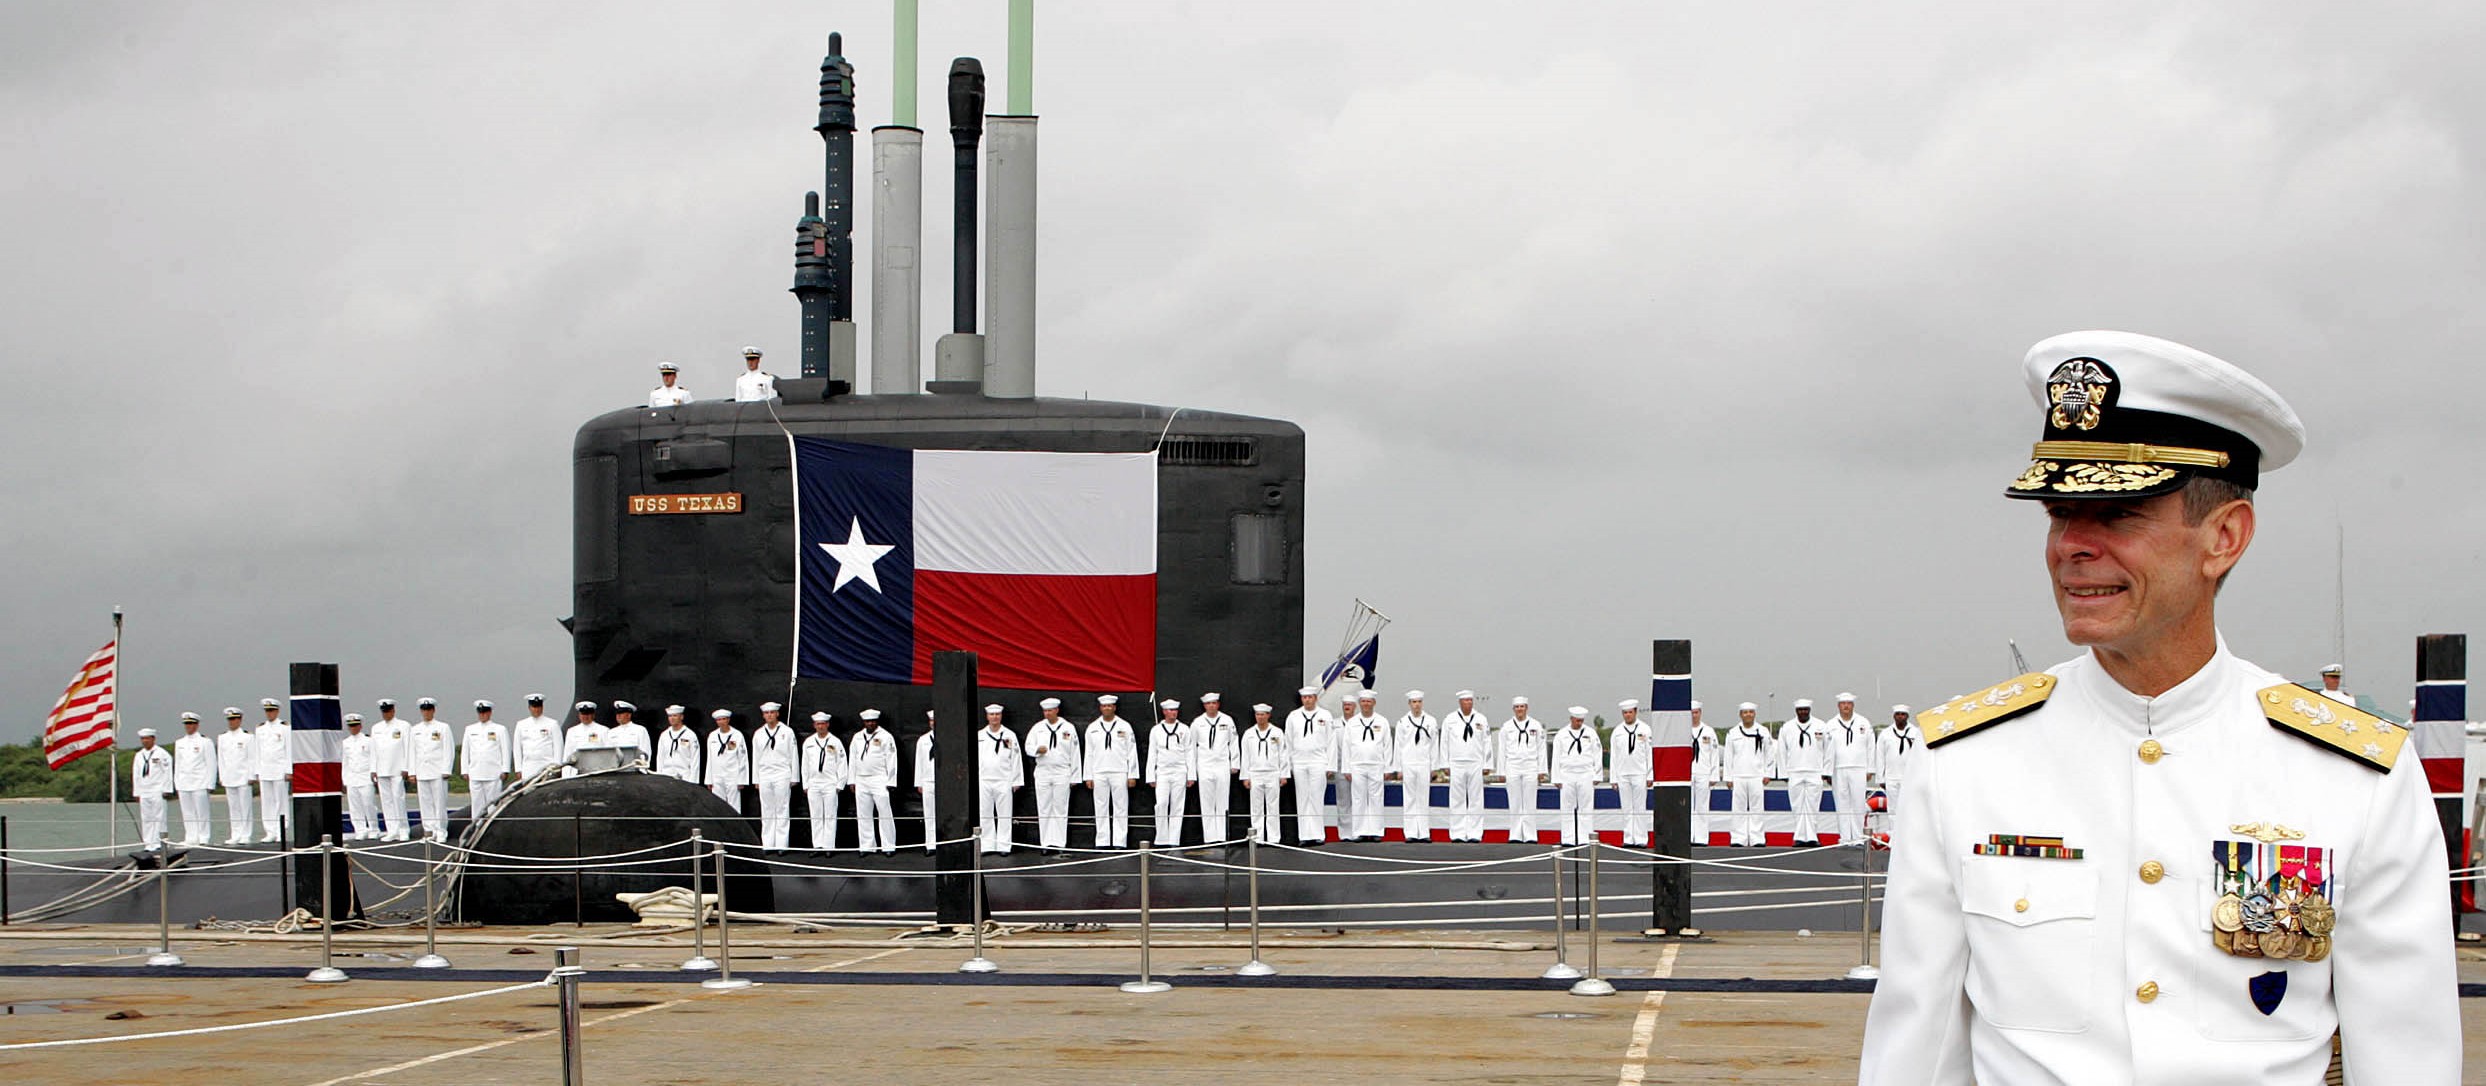 ssn-775 uss texas virginia class attack submarine navy 2006 35 commissioning ceremony galveston texas